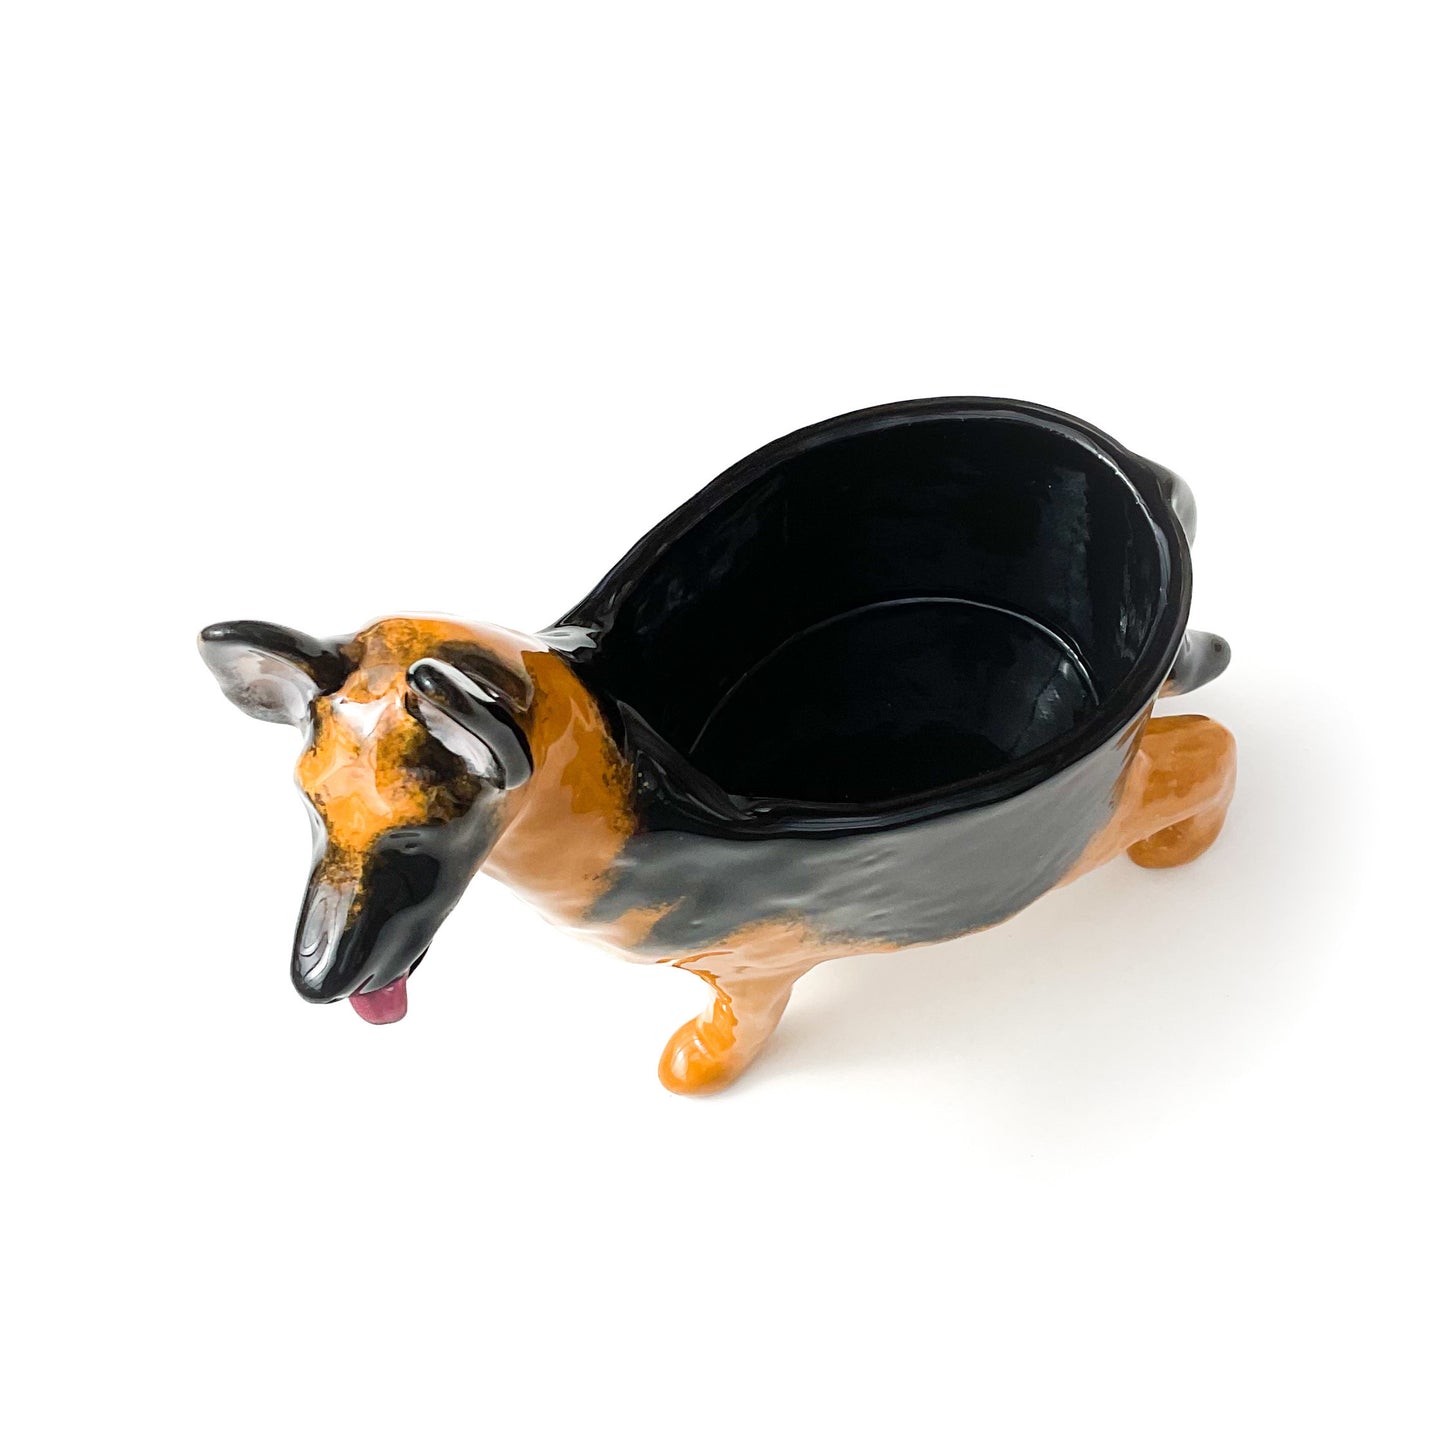 German Shepherd Dog Planter - Ceramic Dog Plant Pot